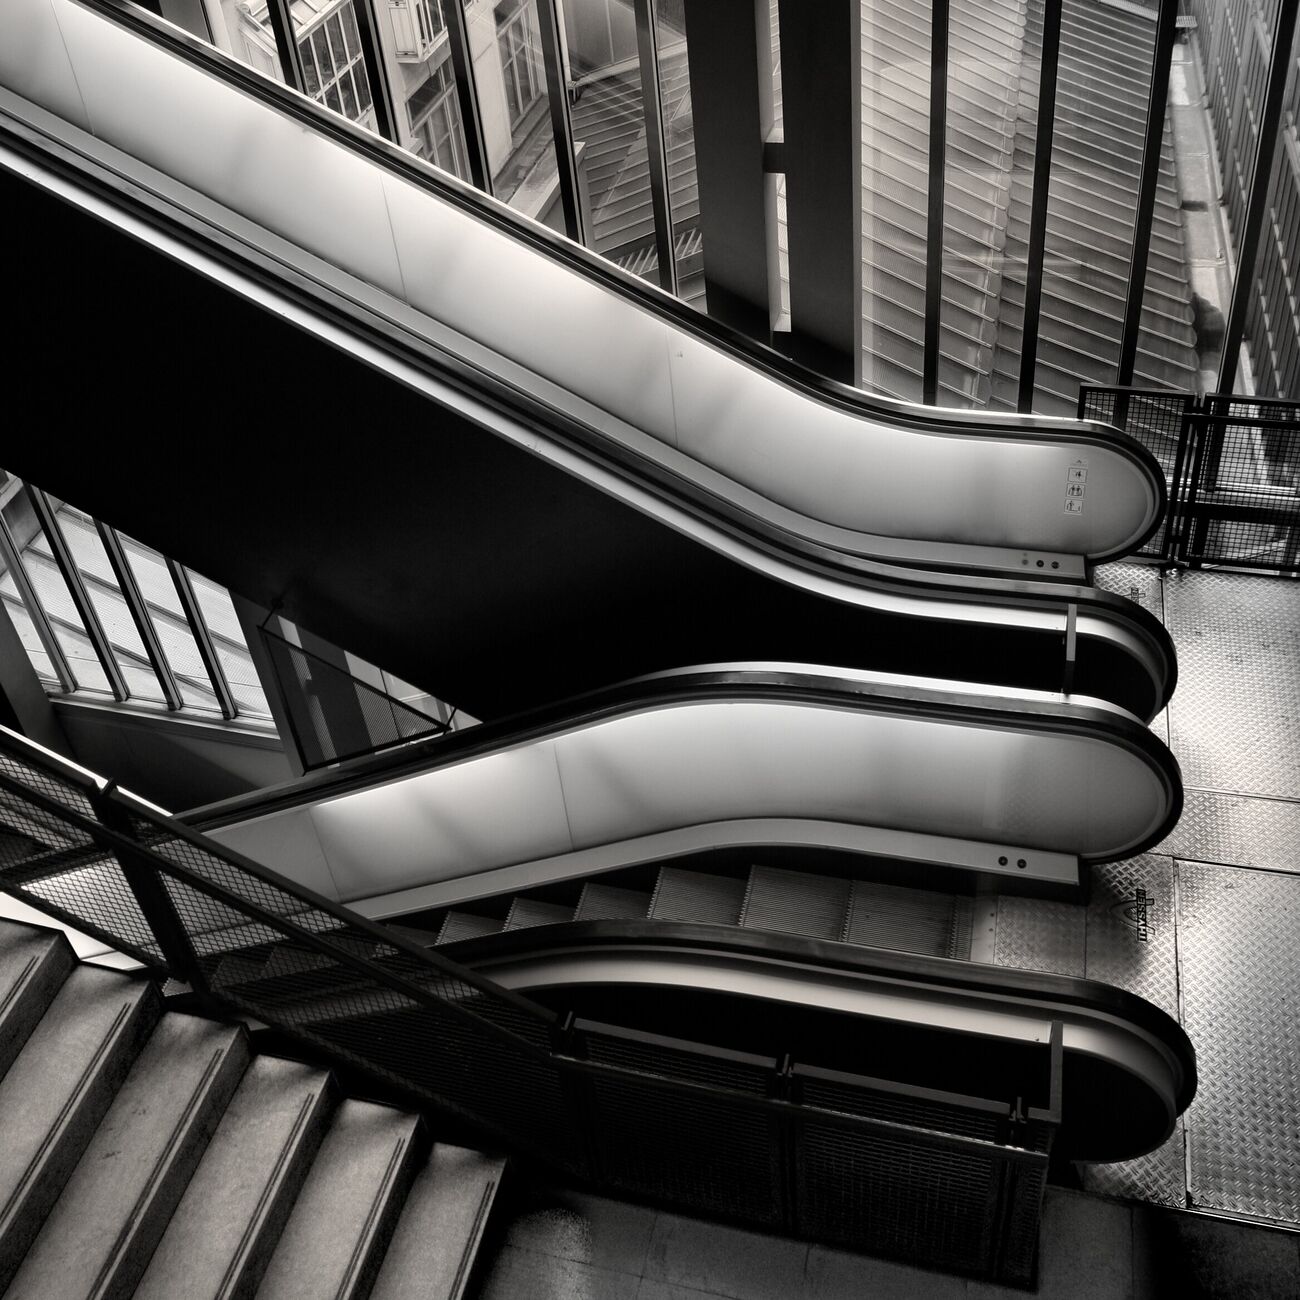 Tirage photographique 13 x 13 cm, Orsay museum escalator. Ref-564-18 - Denis Olivier Photographie d'Art